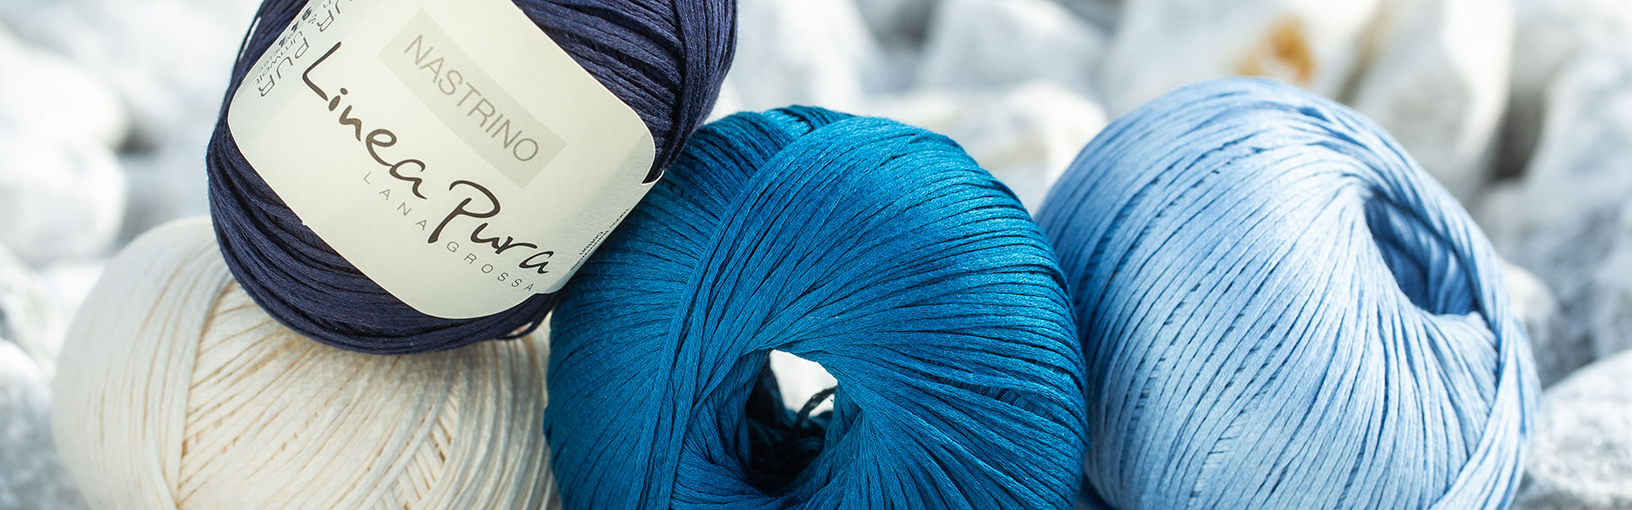 High quality yarns for knitting, crocheting & felting Lana Grossa Yarns | Sock yarns | 6-ply